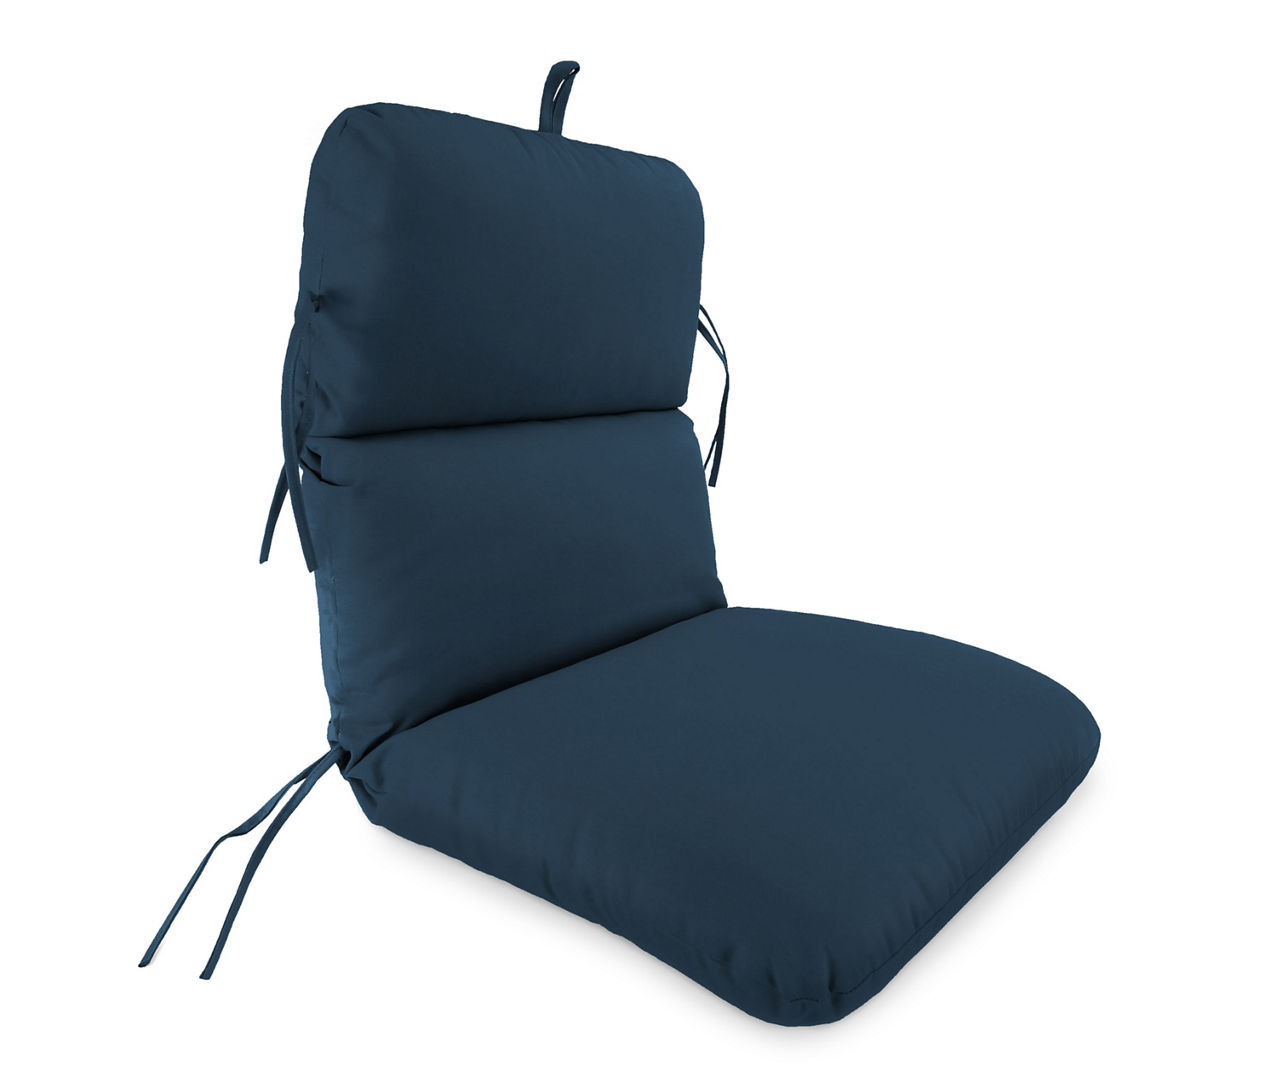 Sunbrella Spectrum Indigo Patio Chair Cushion